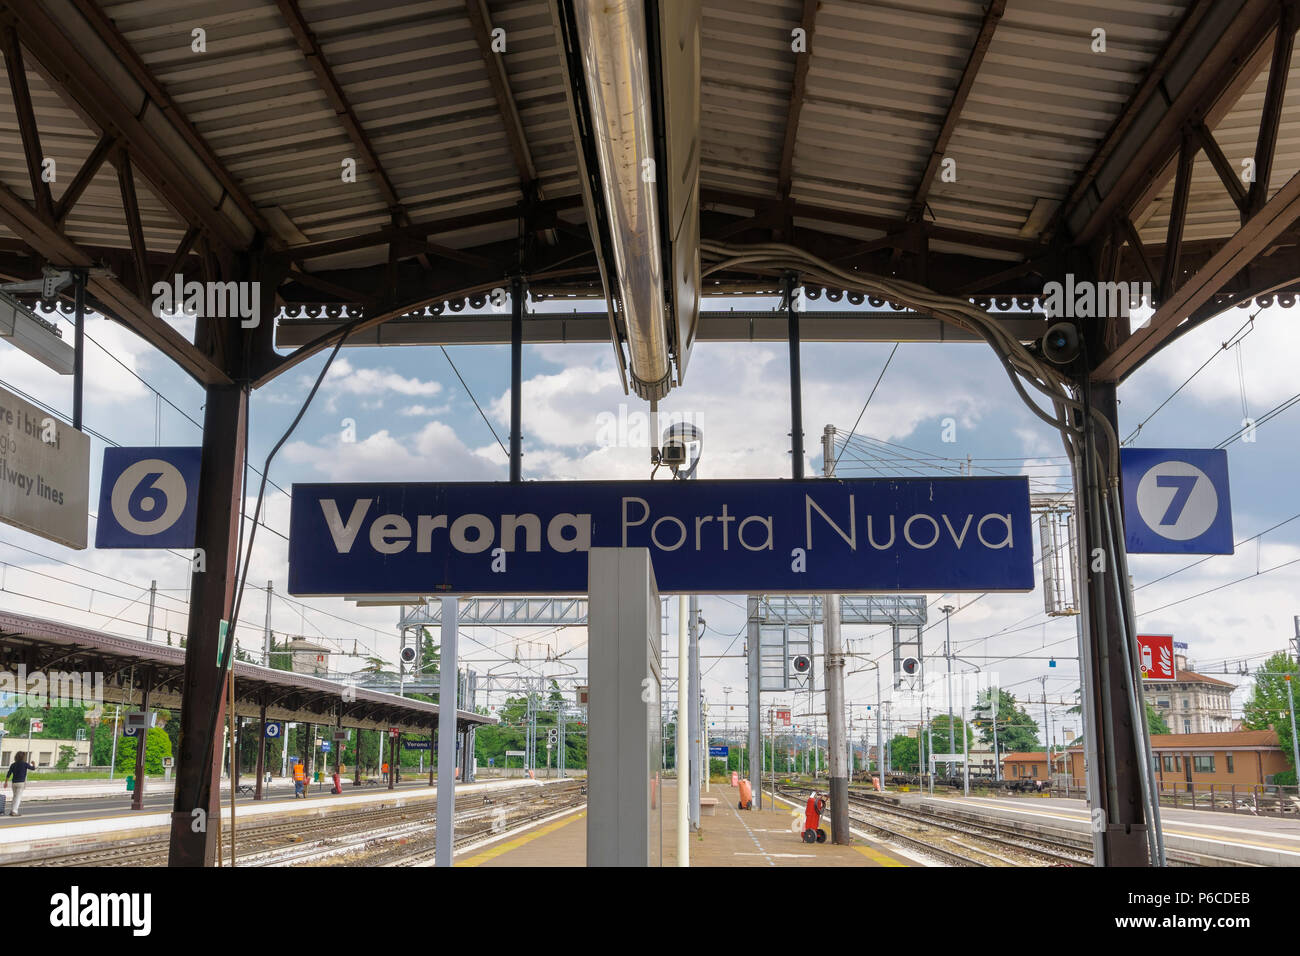 Verona porta nuova station hi-res stock photography and images - Alamy